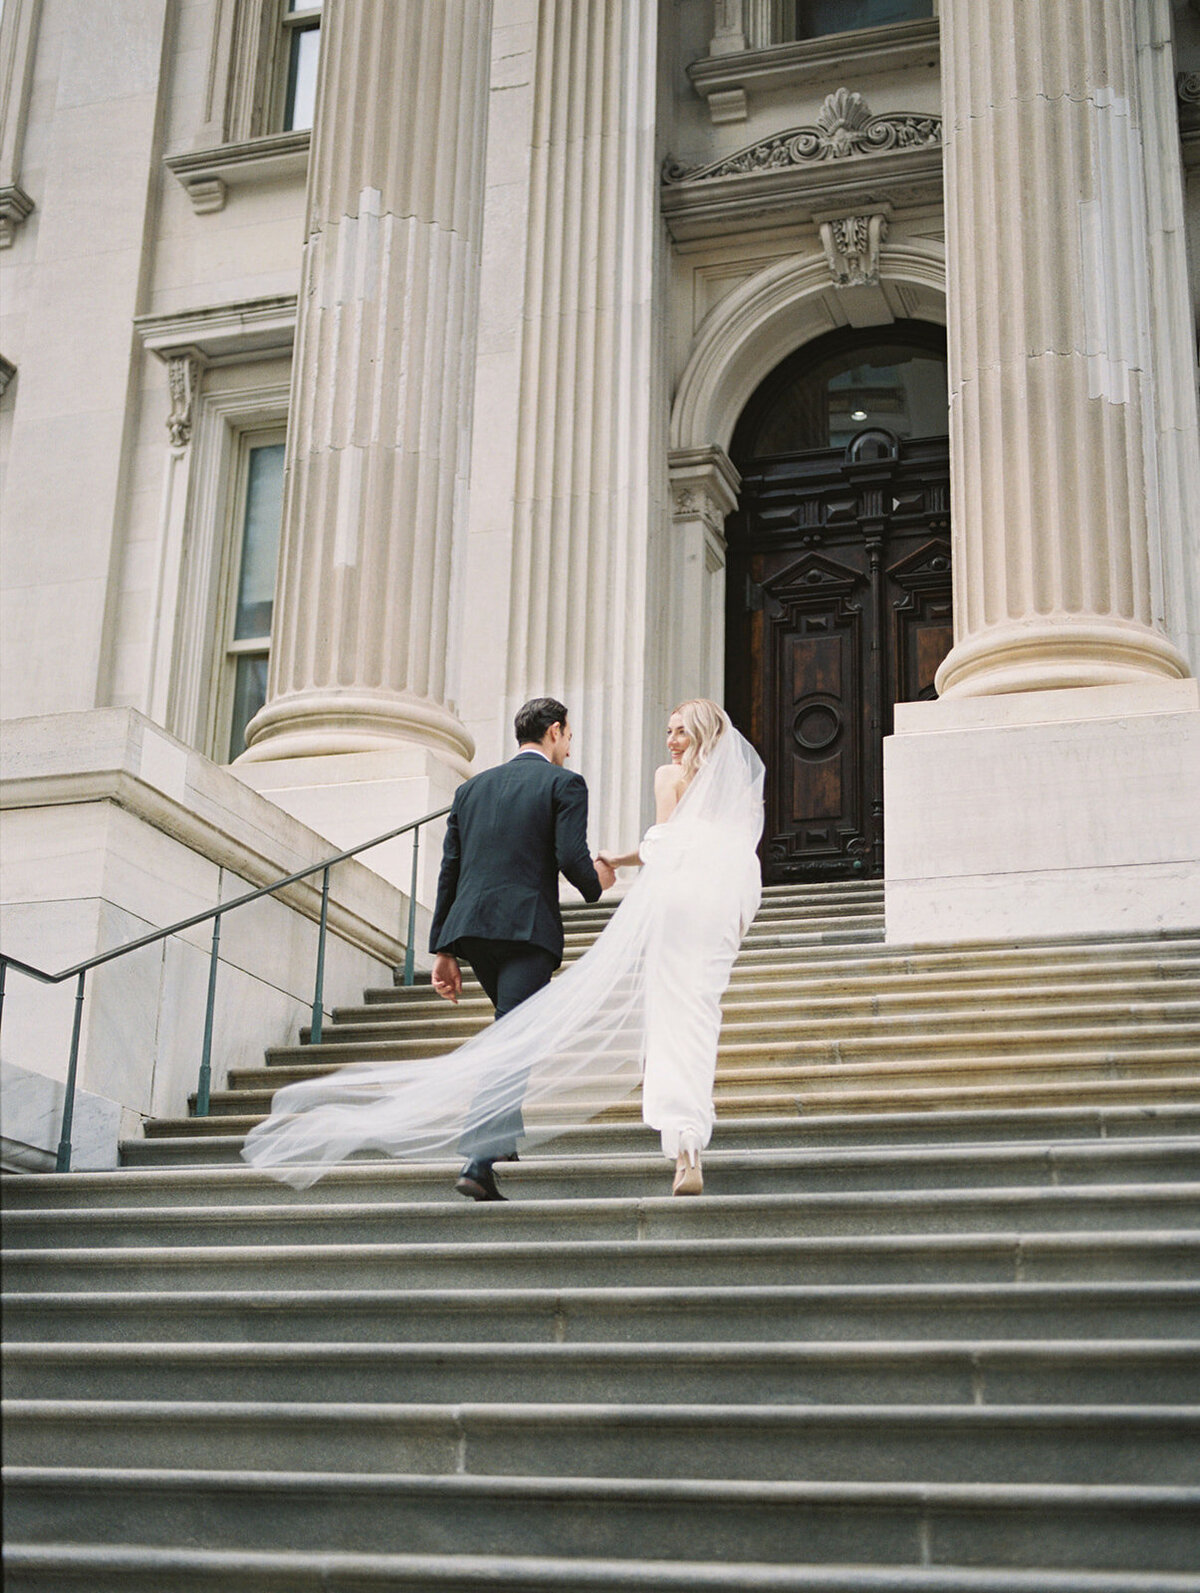 The Plaza Hotel - New York City - Elopement Wedding - Stephanie Michelle Photography - _stephaniemichellephotog - 0-R1-E008